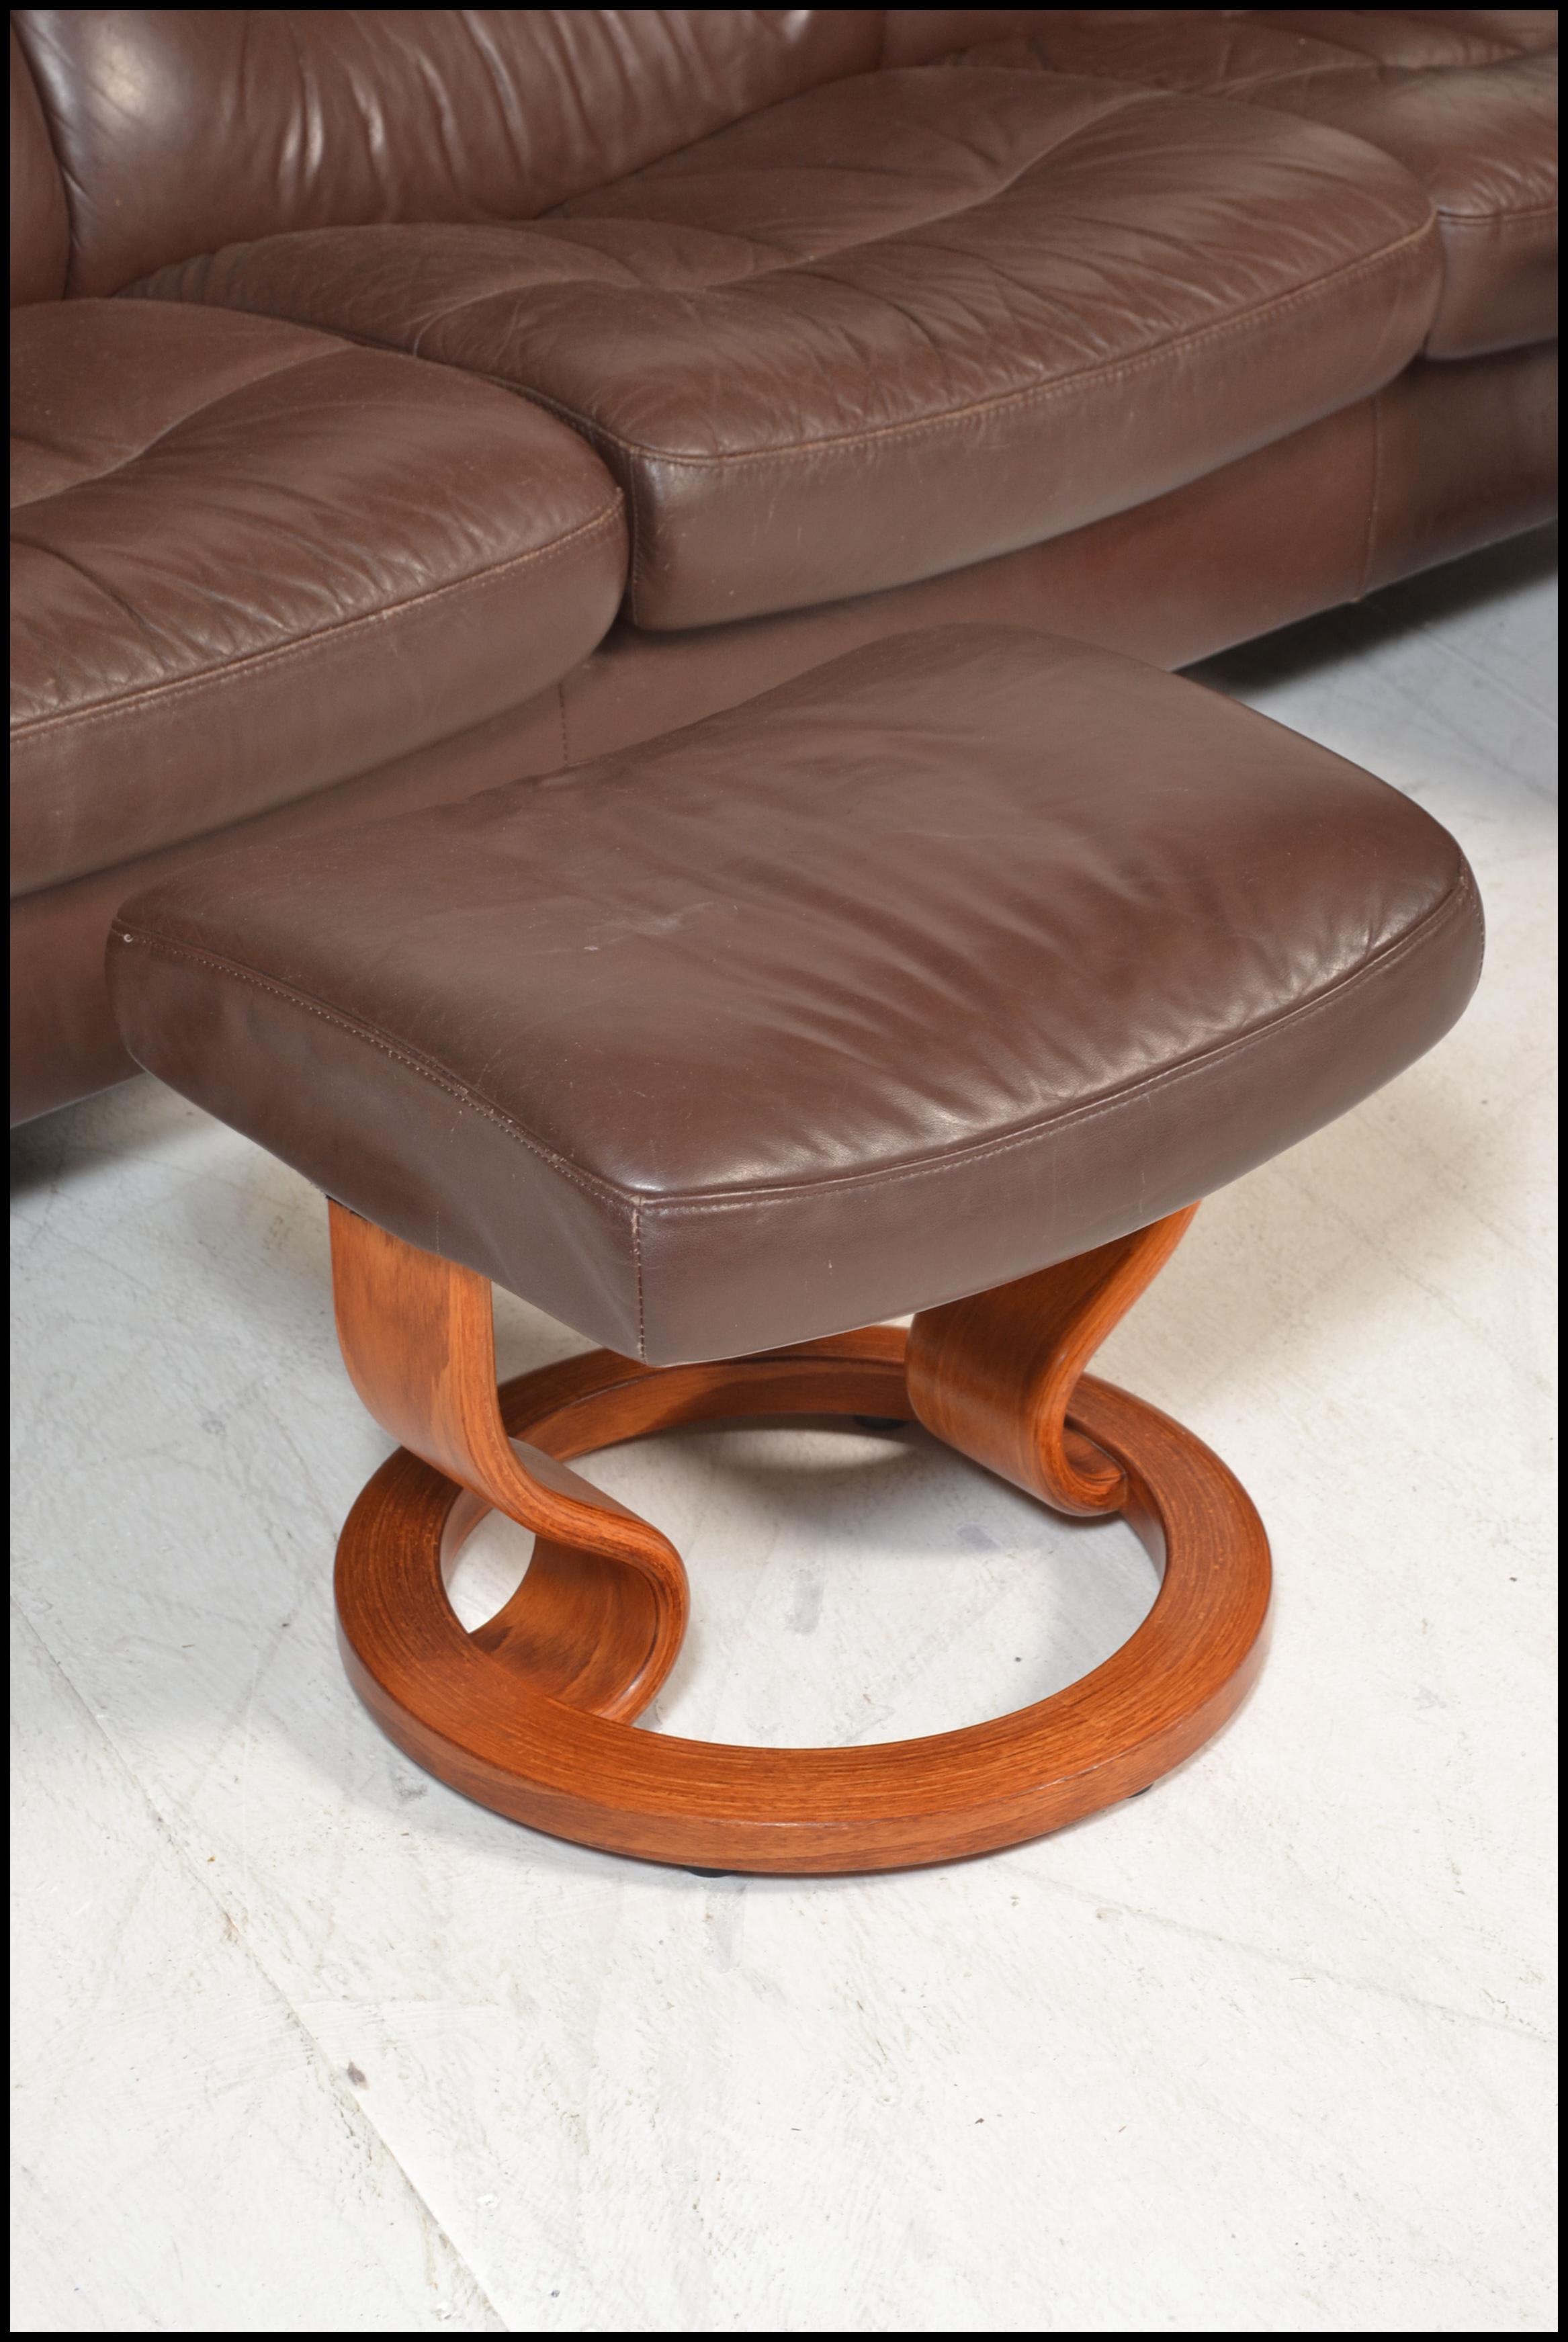 An Ekornes Stressless three seater brown leather Reclining Sofa of Scandinavian design, having - Image 4 of 6